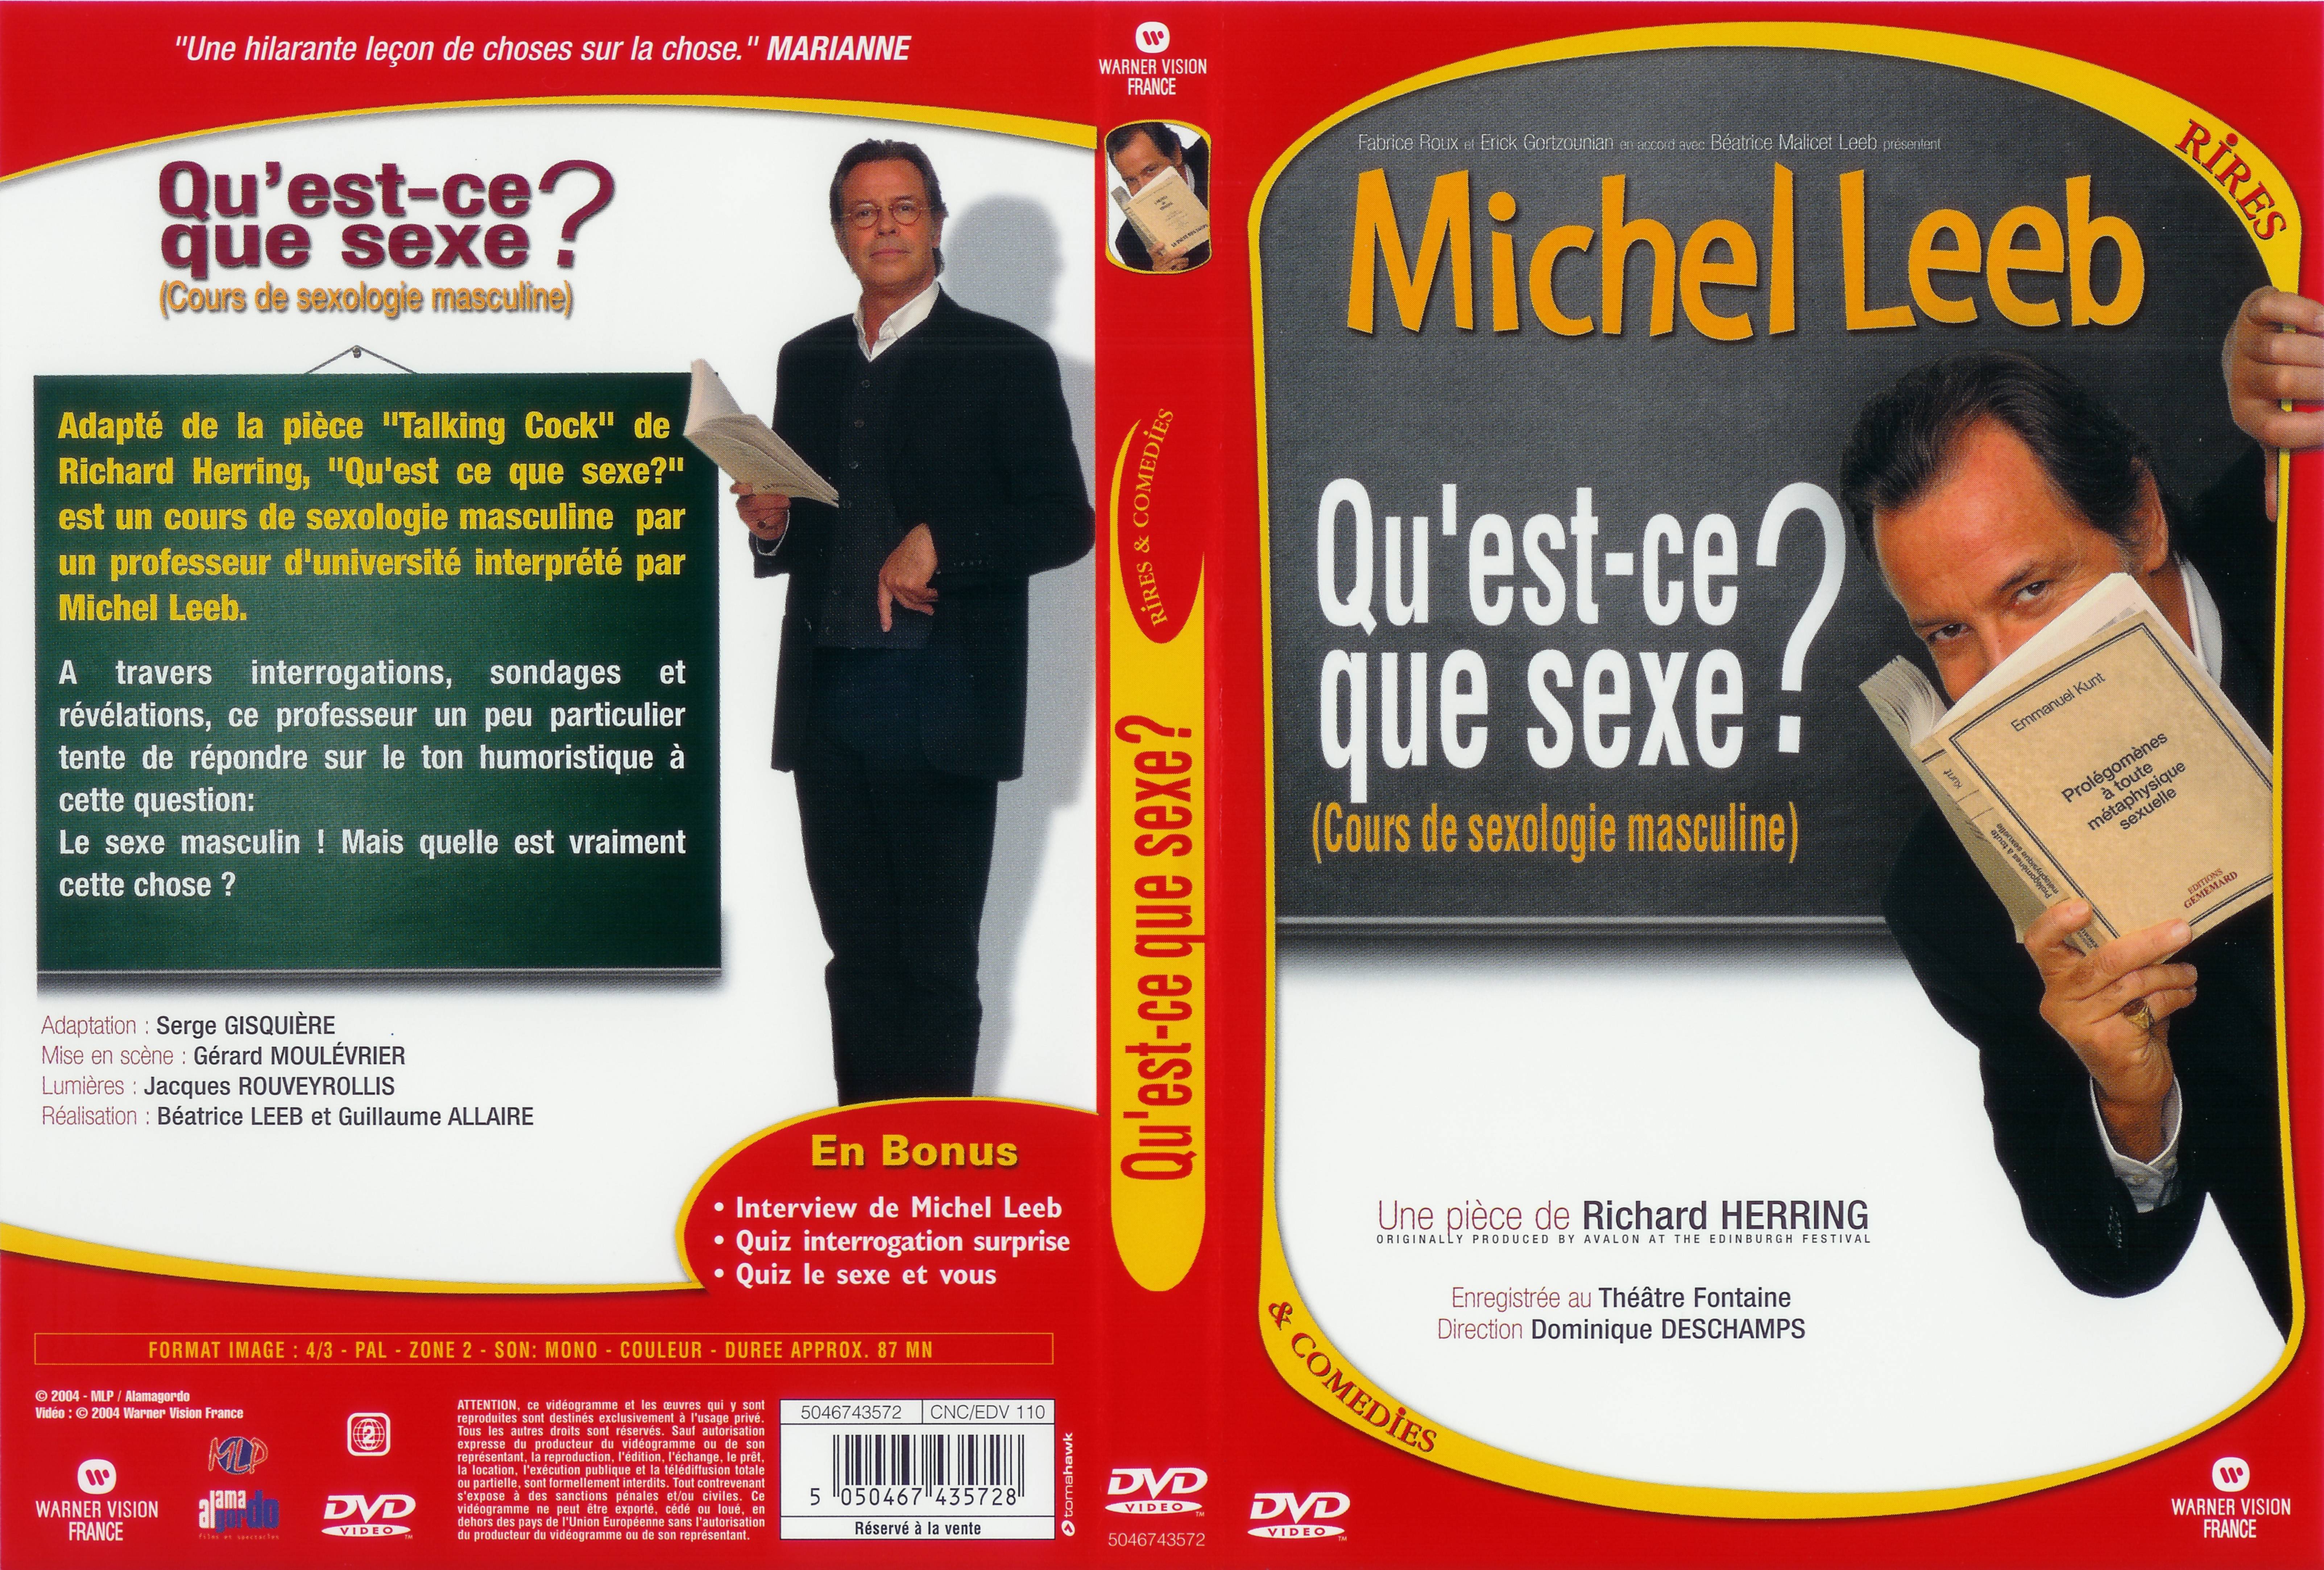 Jaquette DVD Michel Leeb qu